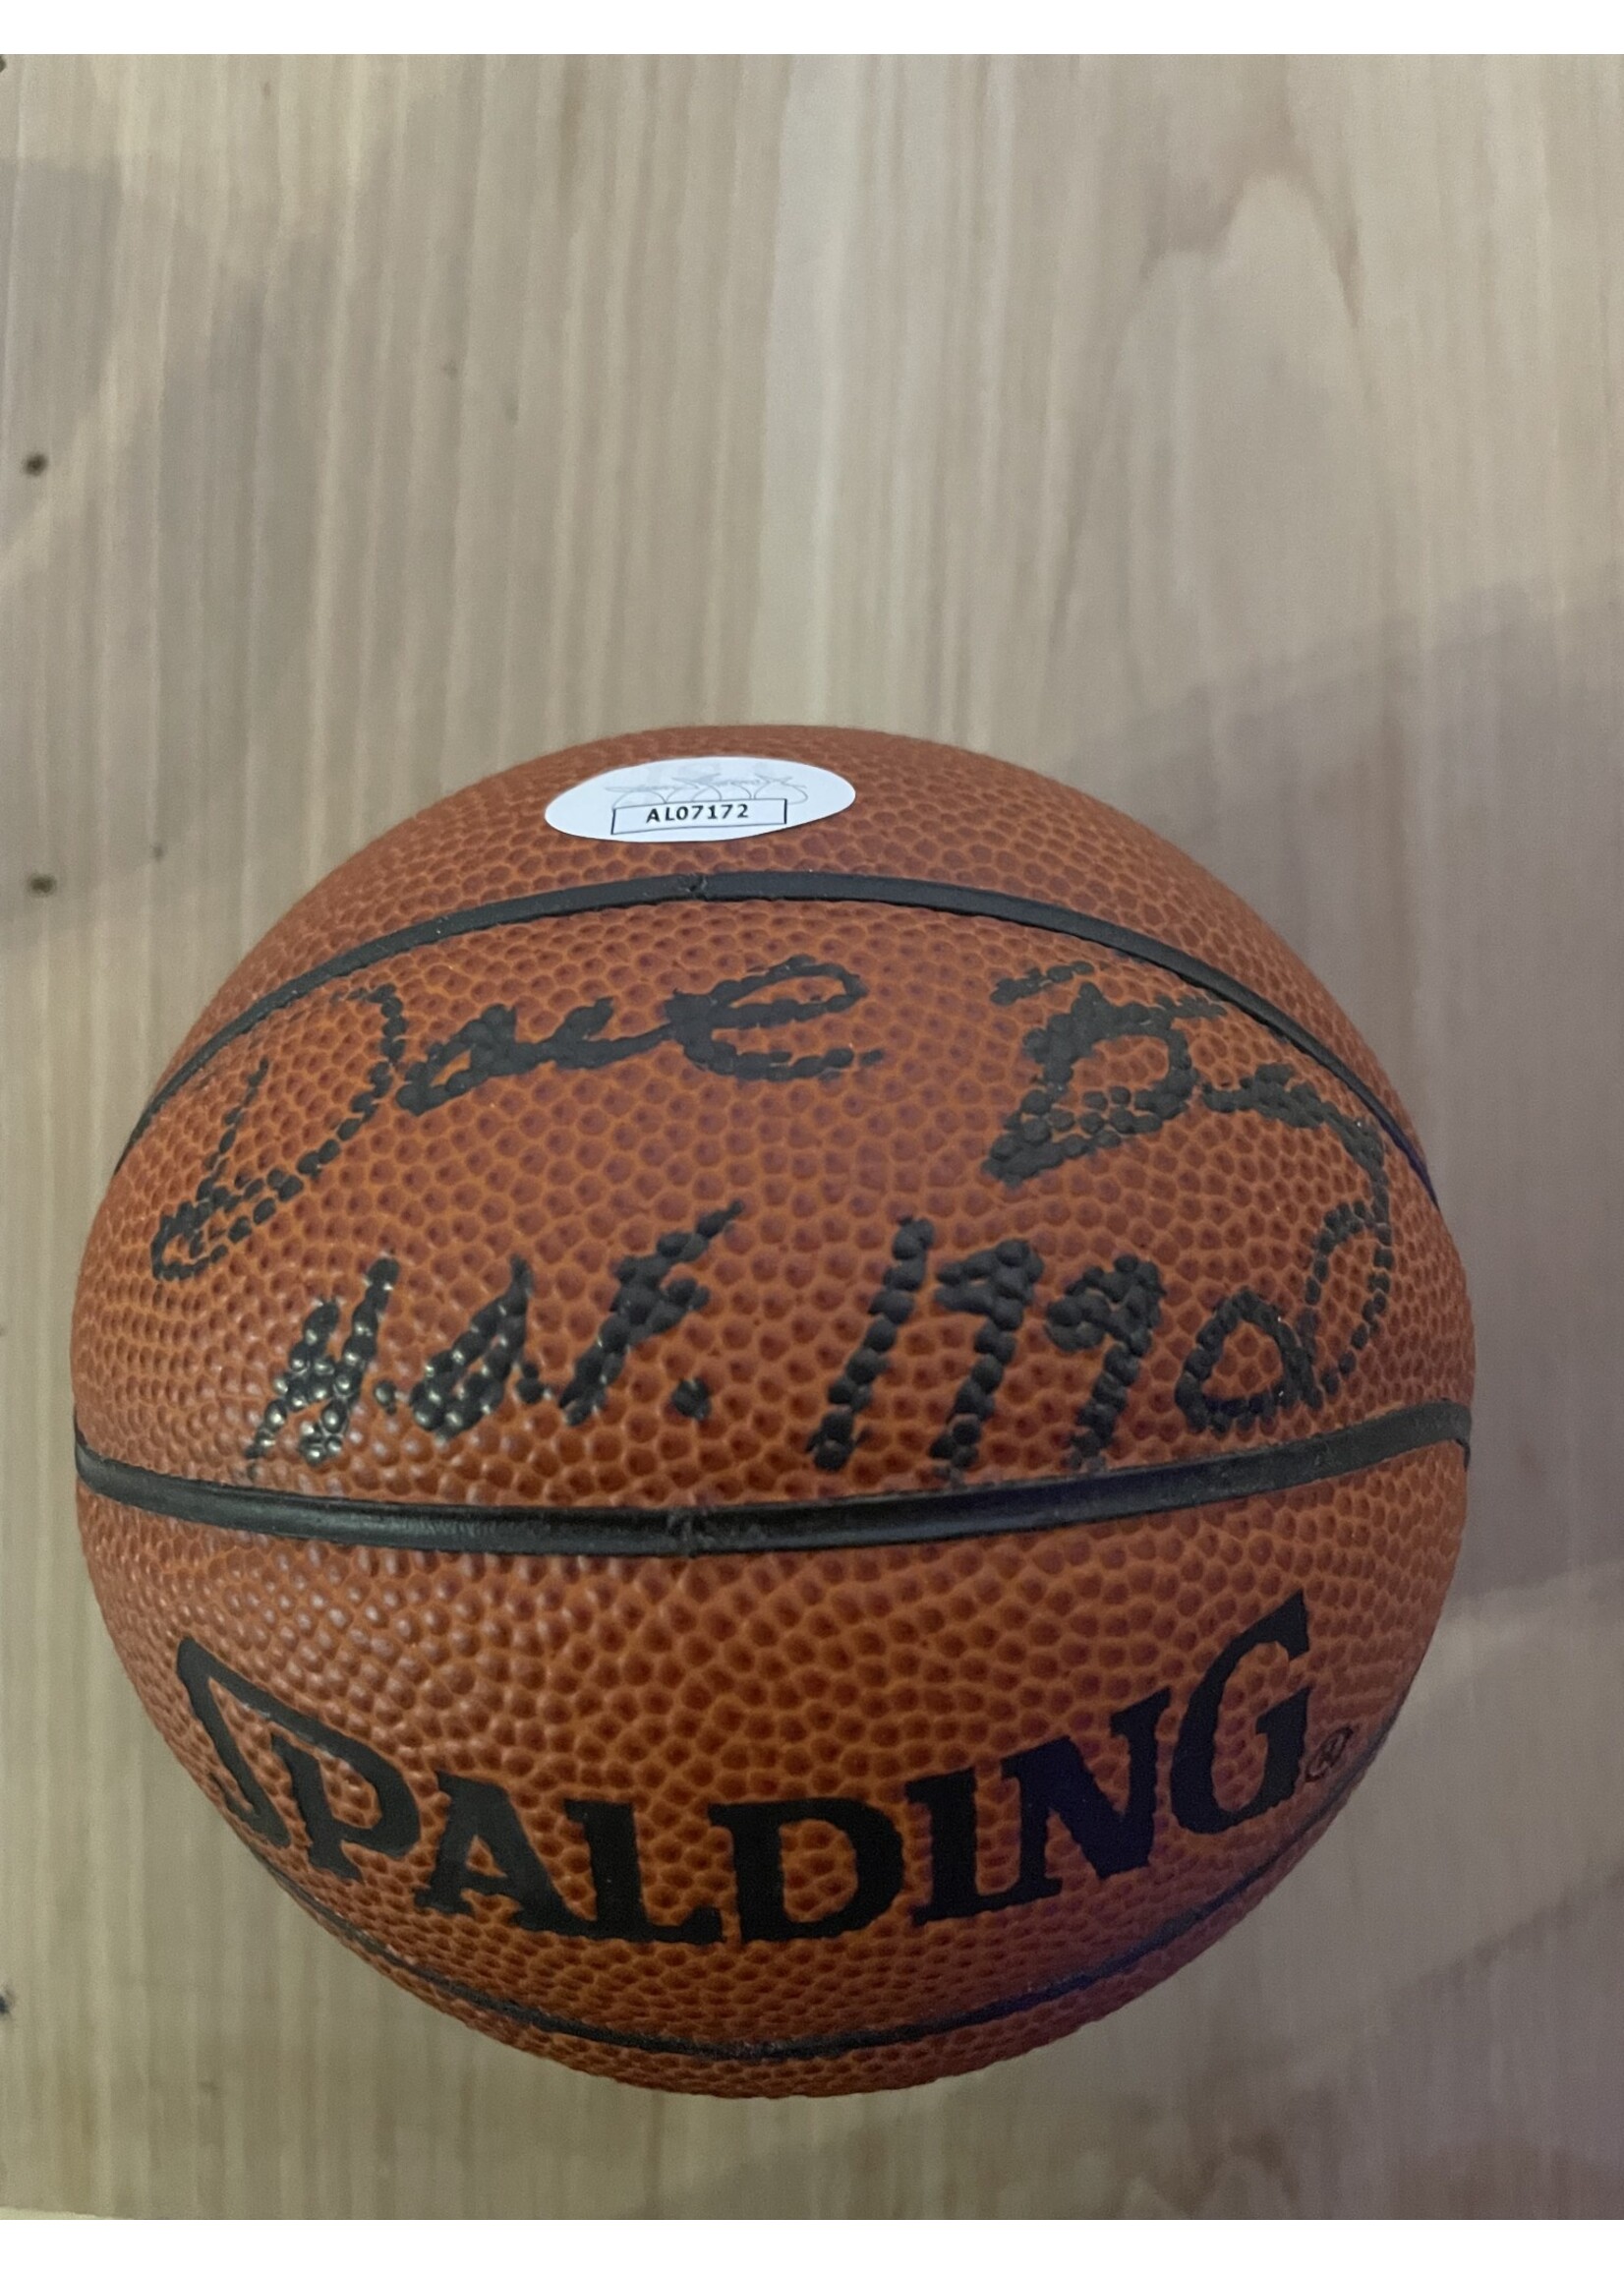 Dave Bing Mini Basketball